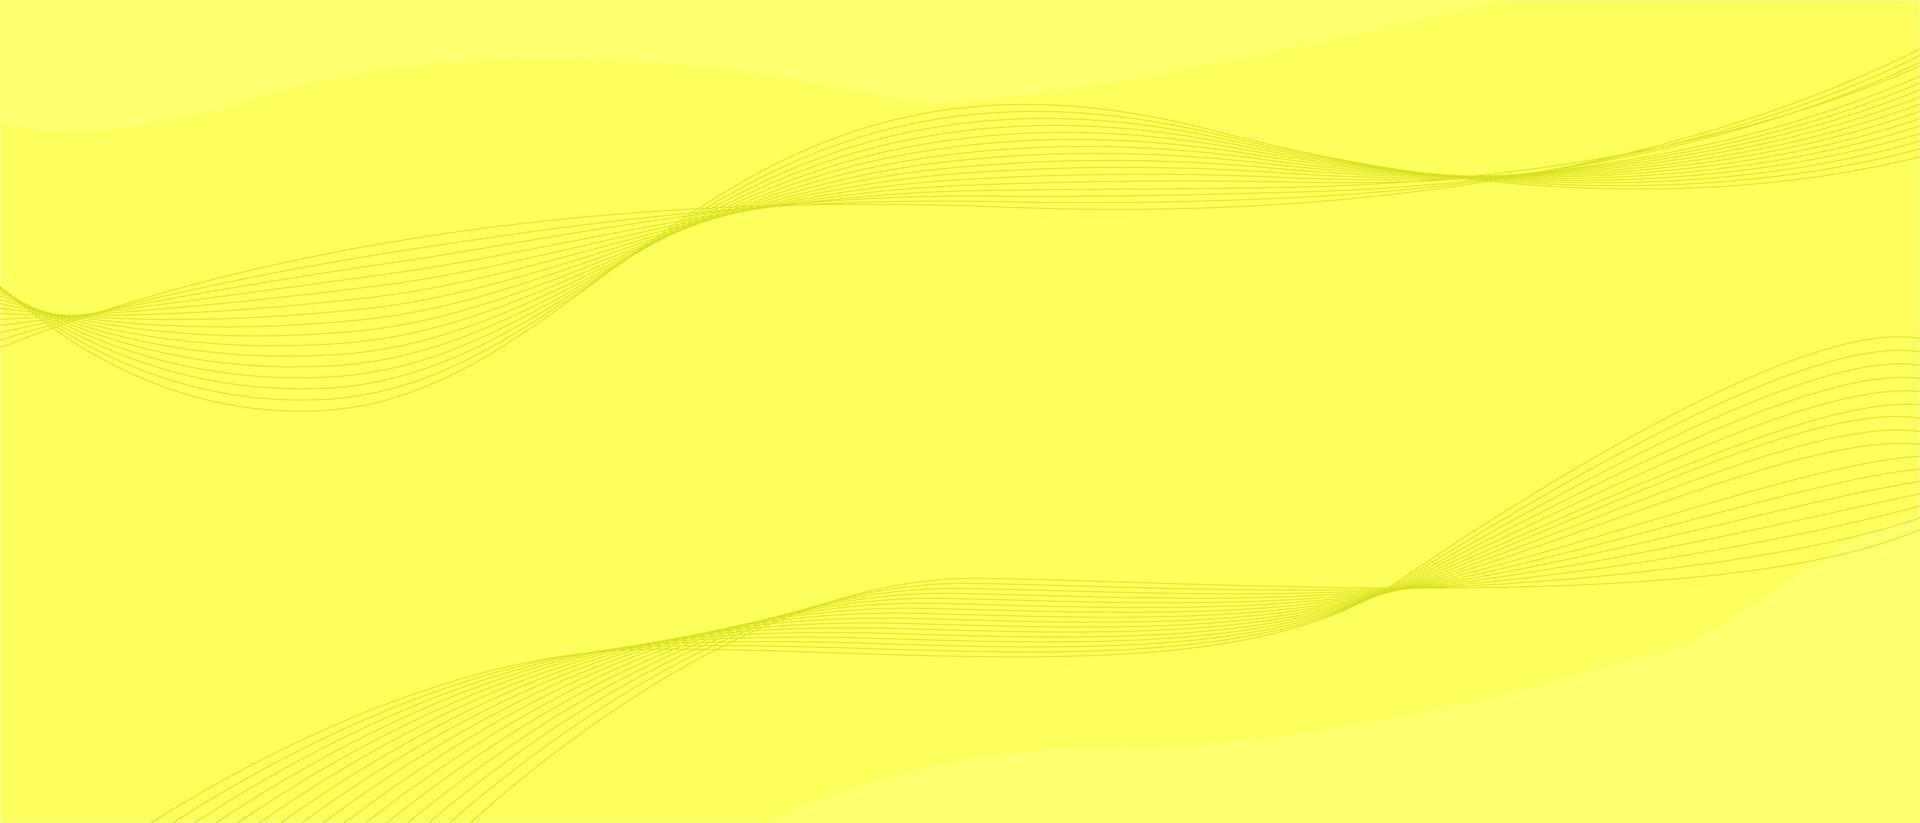 fondo amarillo con línea ondulada geométrica vector